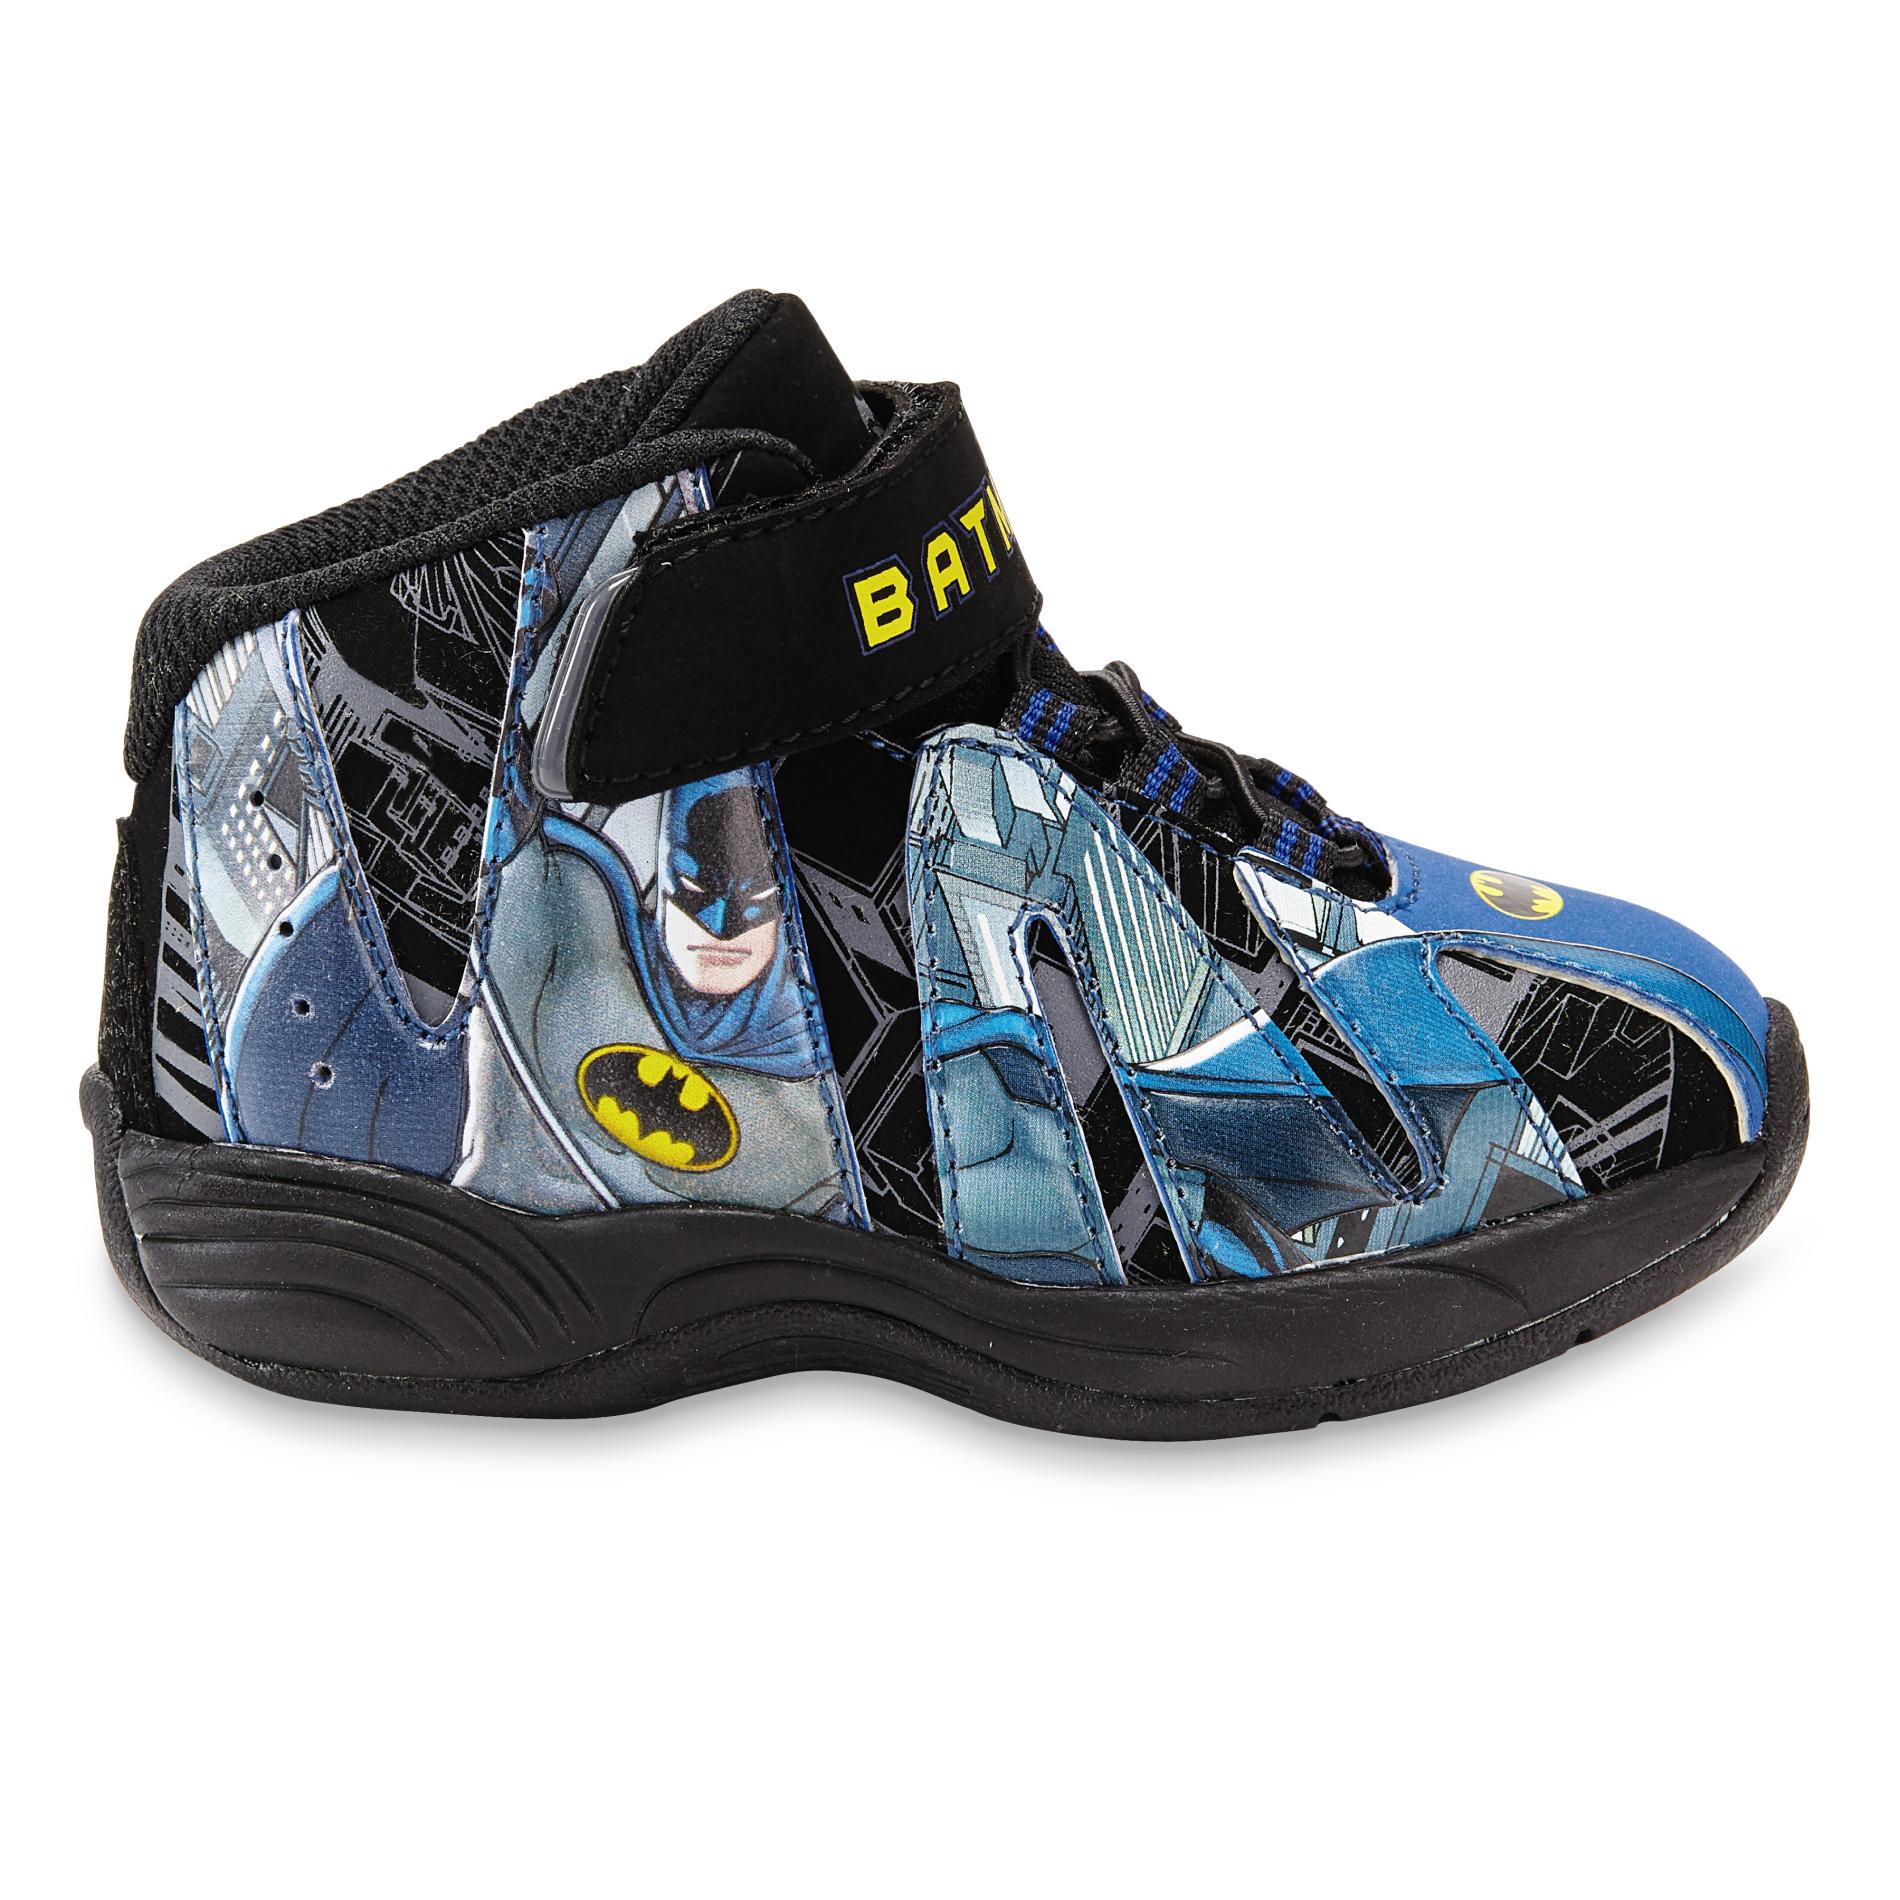 DC Comics Batman Toddler Boy's High-Top Basketball Shoe - Black/Blue